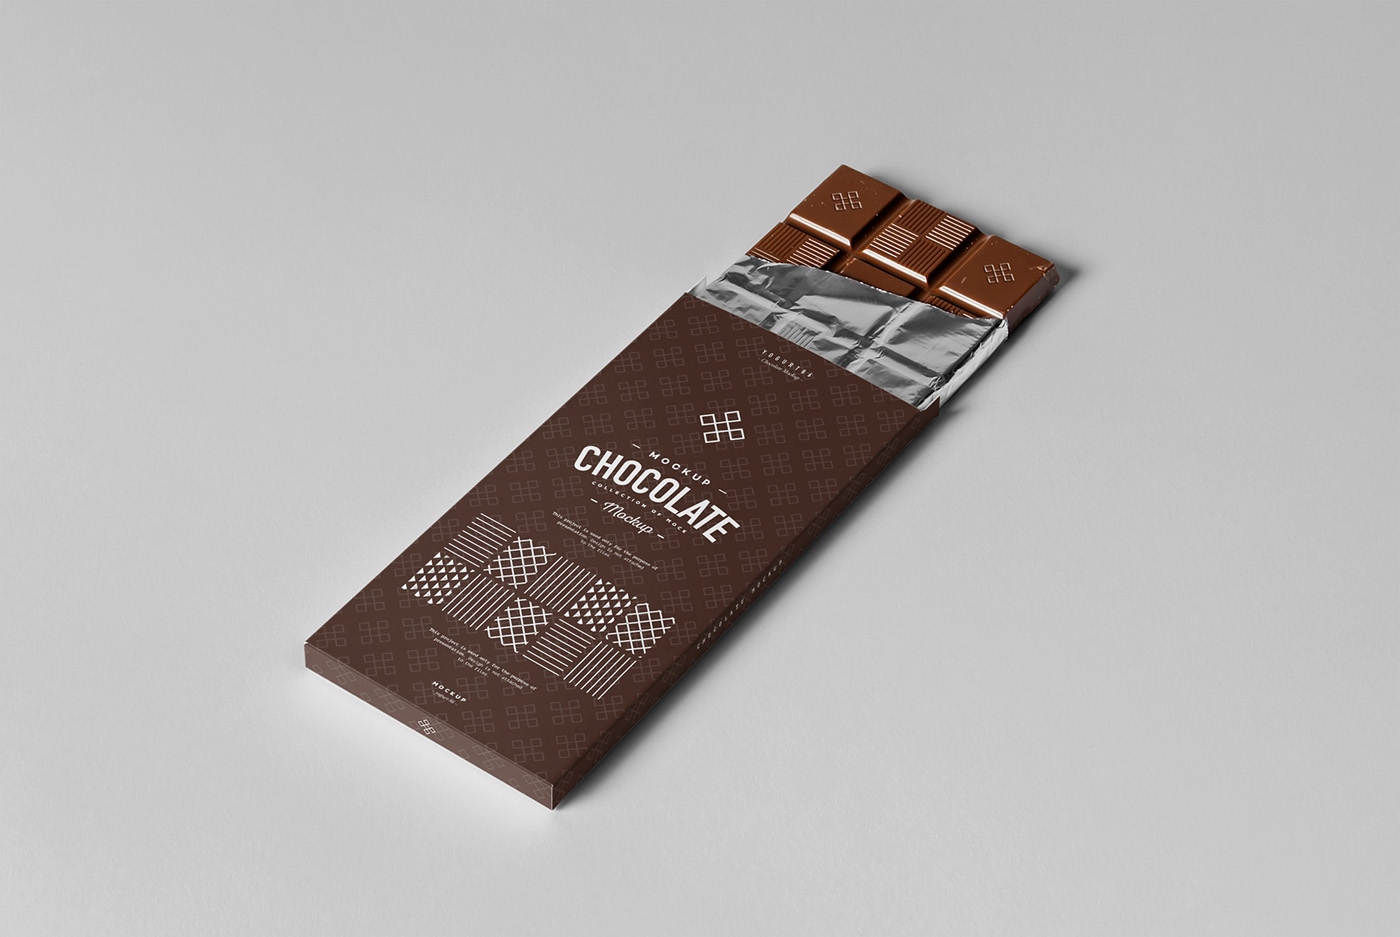 res a box of chocolates rar download